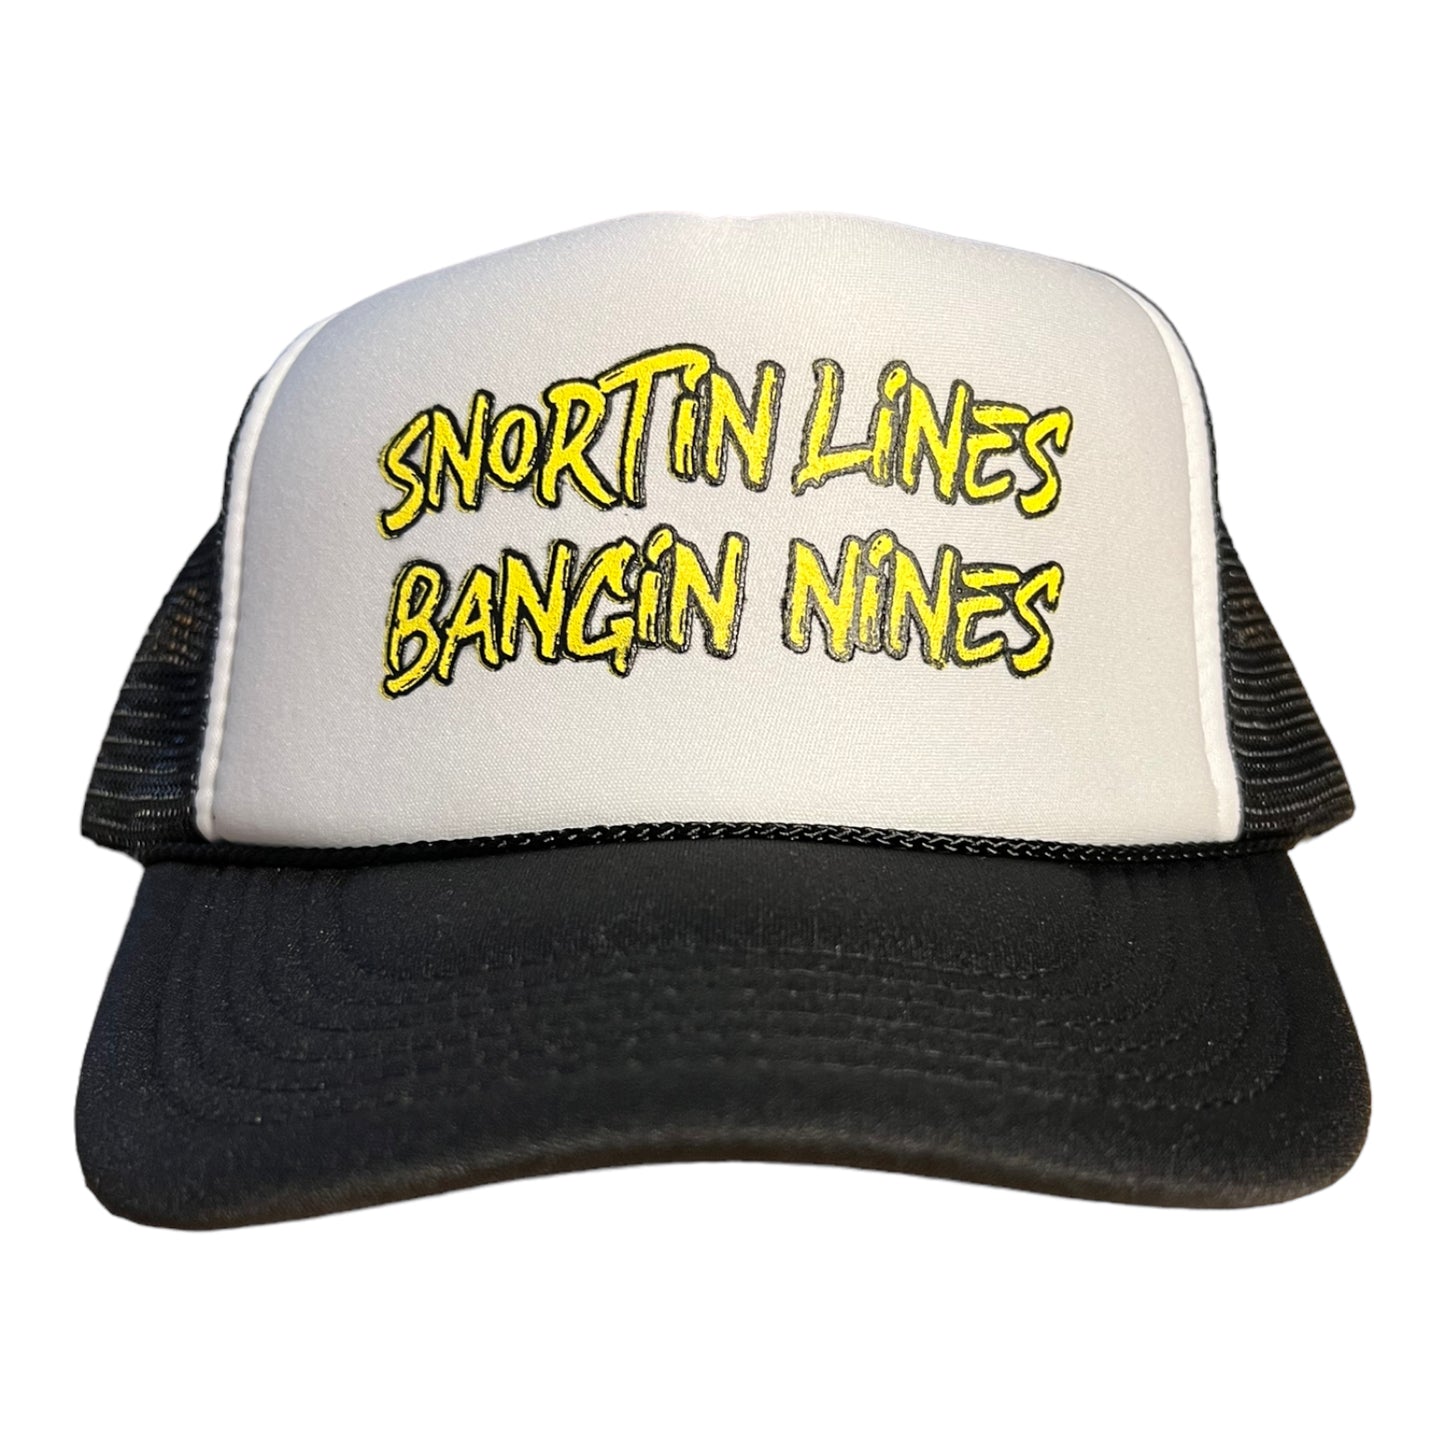 Snortin Lines Bangin Nines Trucker Hat Funny Trucker Hat Black/White